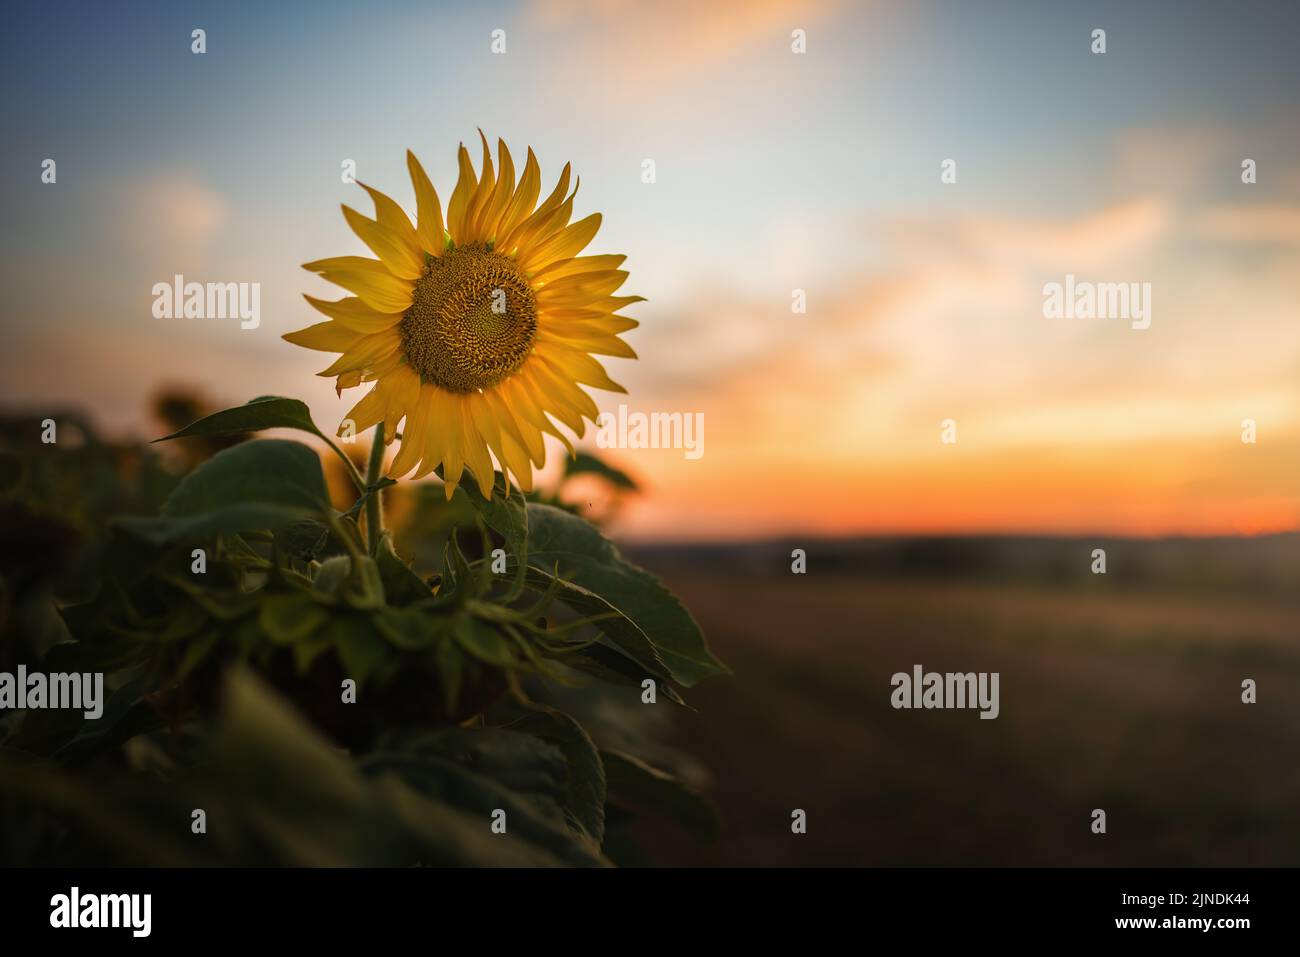 Selektiv fokussierte Sonnenblume in einem Feld in der Dämmerung. Stockfoto